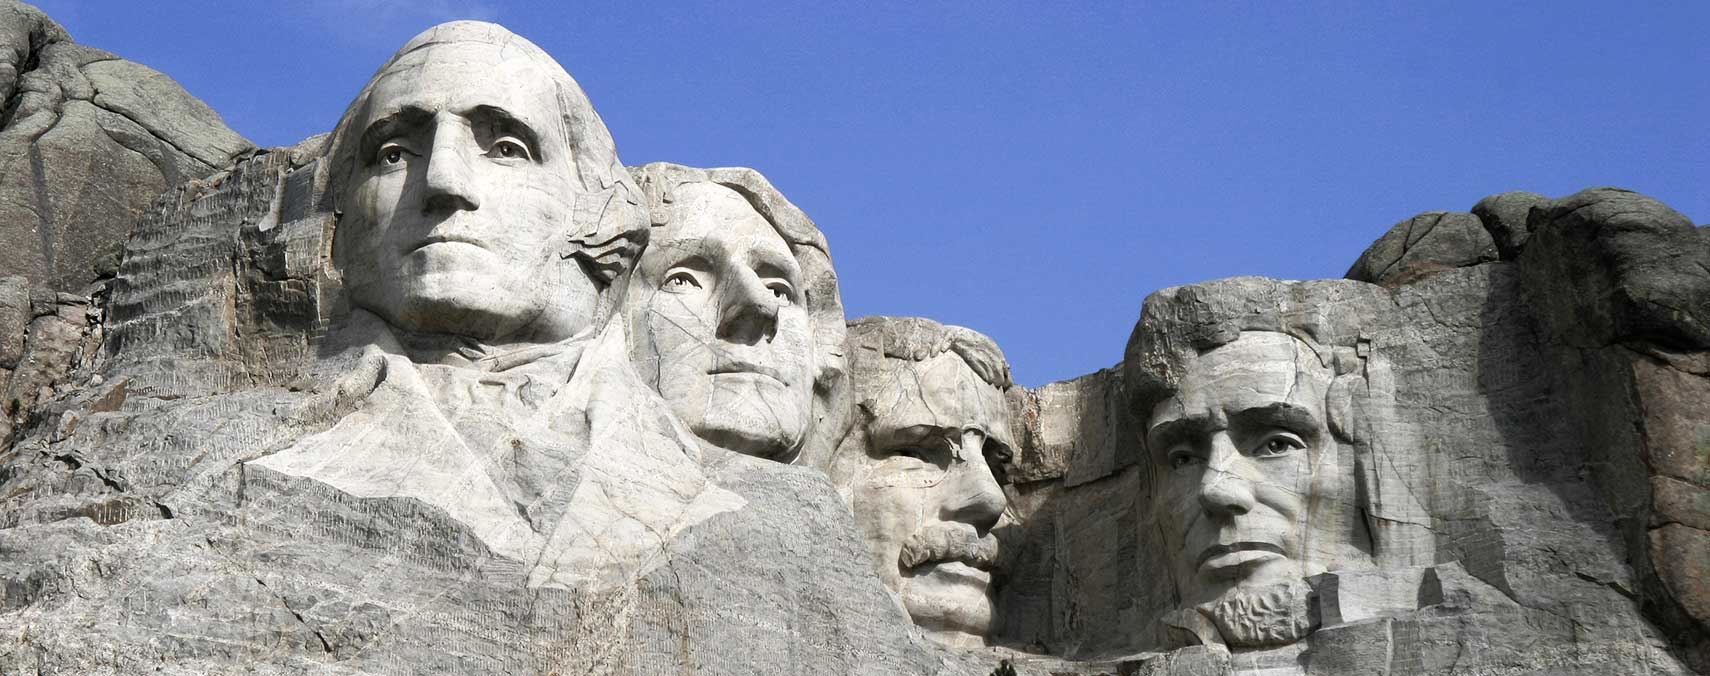 Heads of four former United States presidents, Mount Rushmore National Memorial, Black Hills, South Dakota